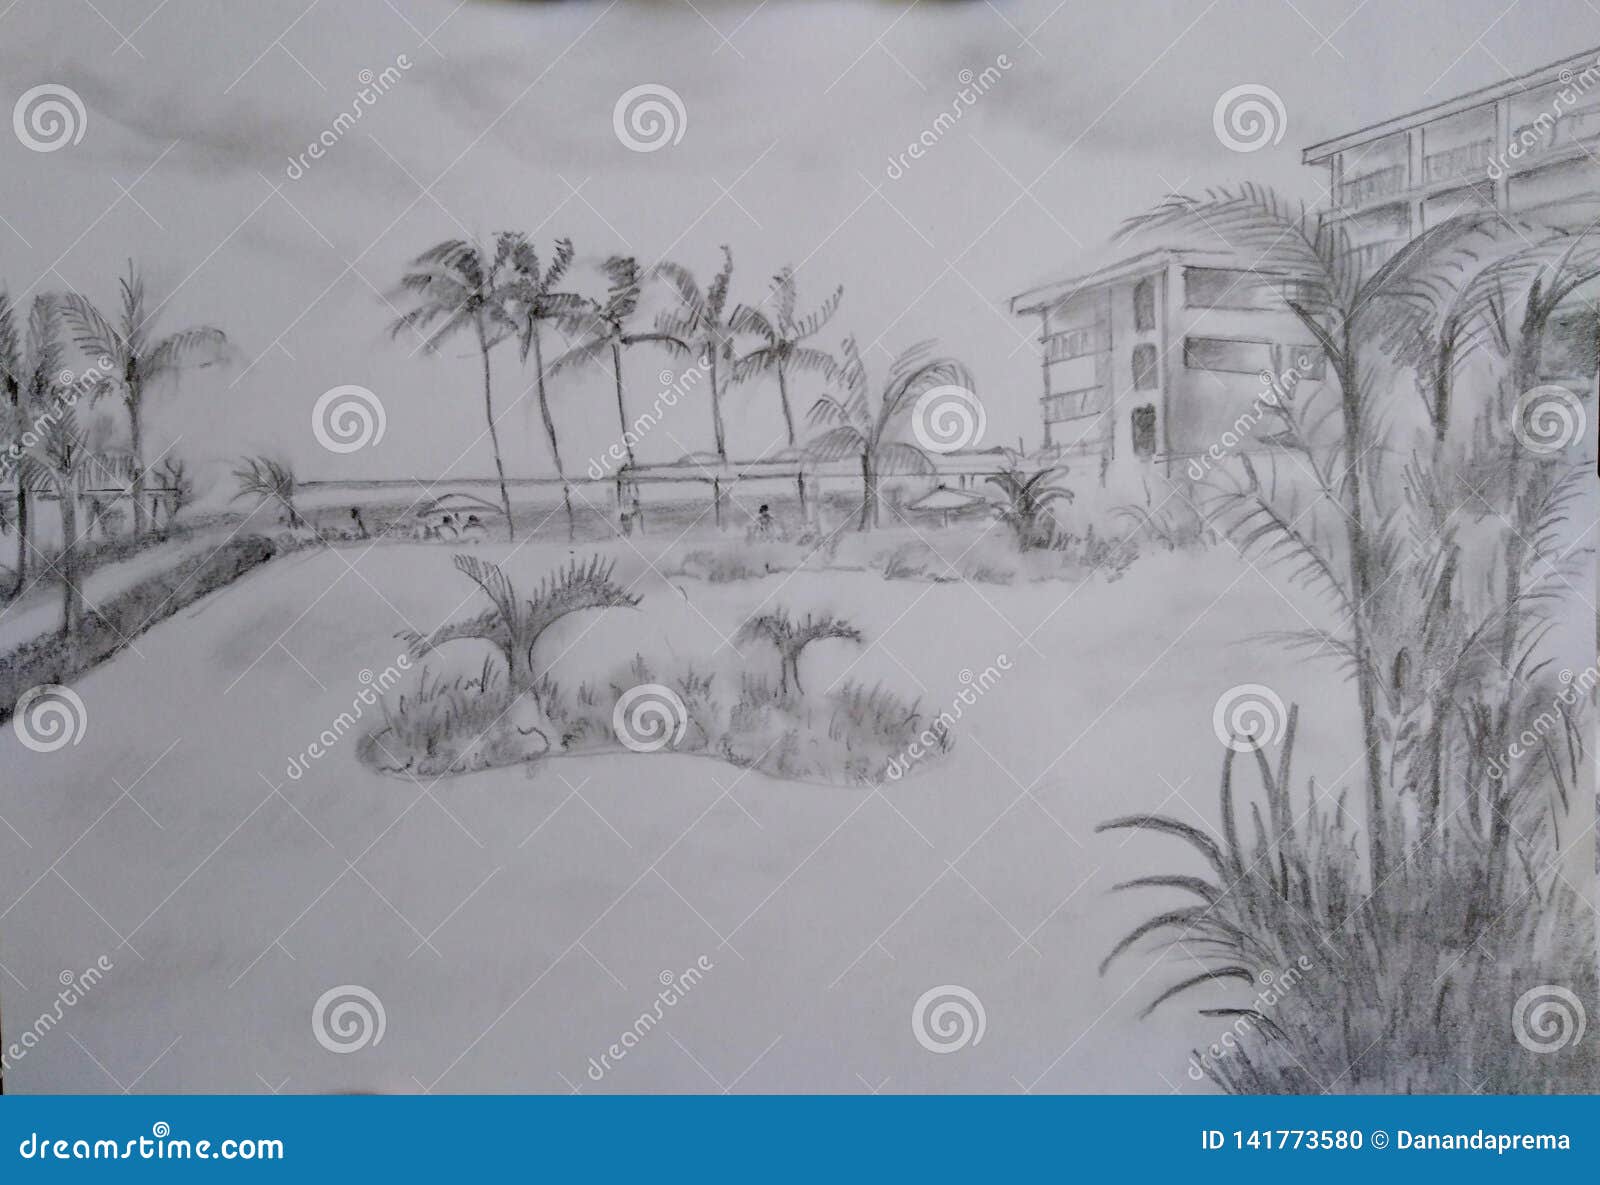 KGM Arts Paper Scenery Pencil Sketch at Rs 1000/piece in Vijayapura | ID:  22447480412